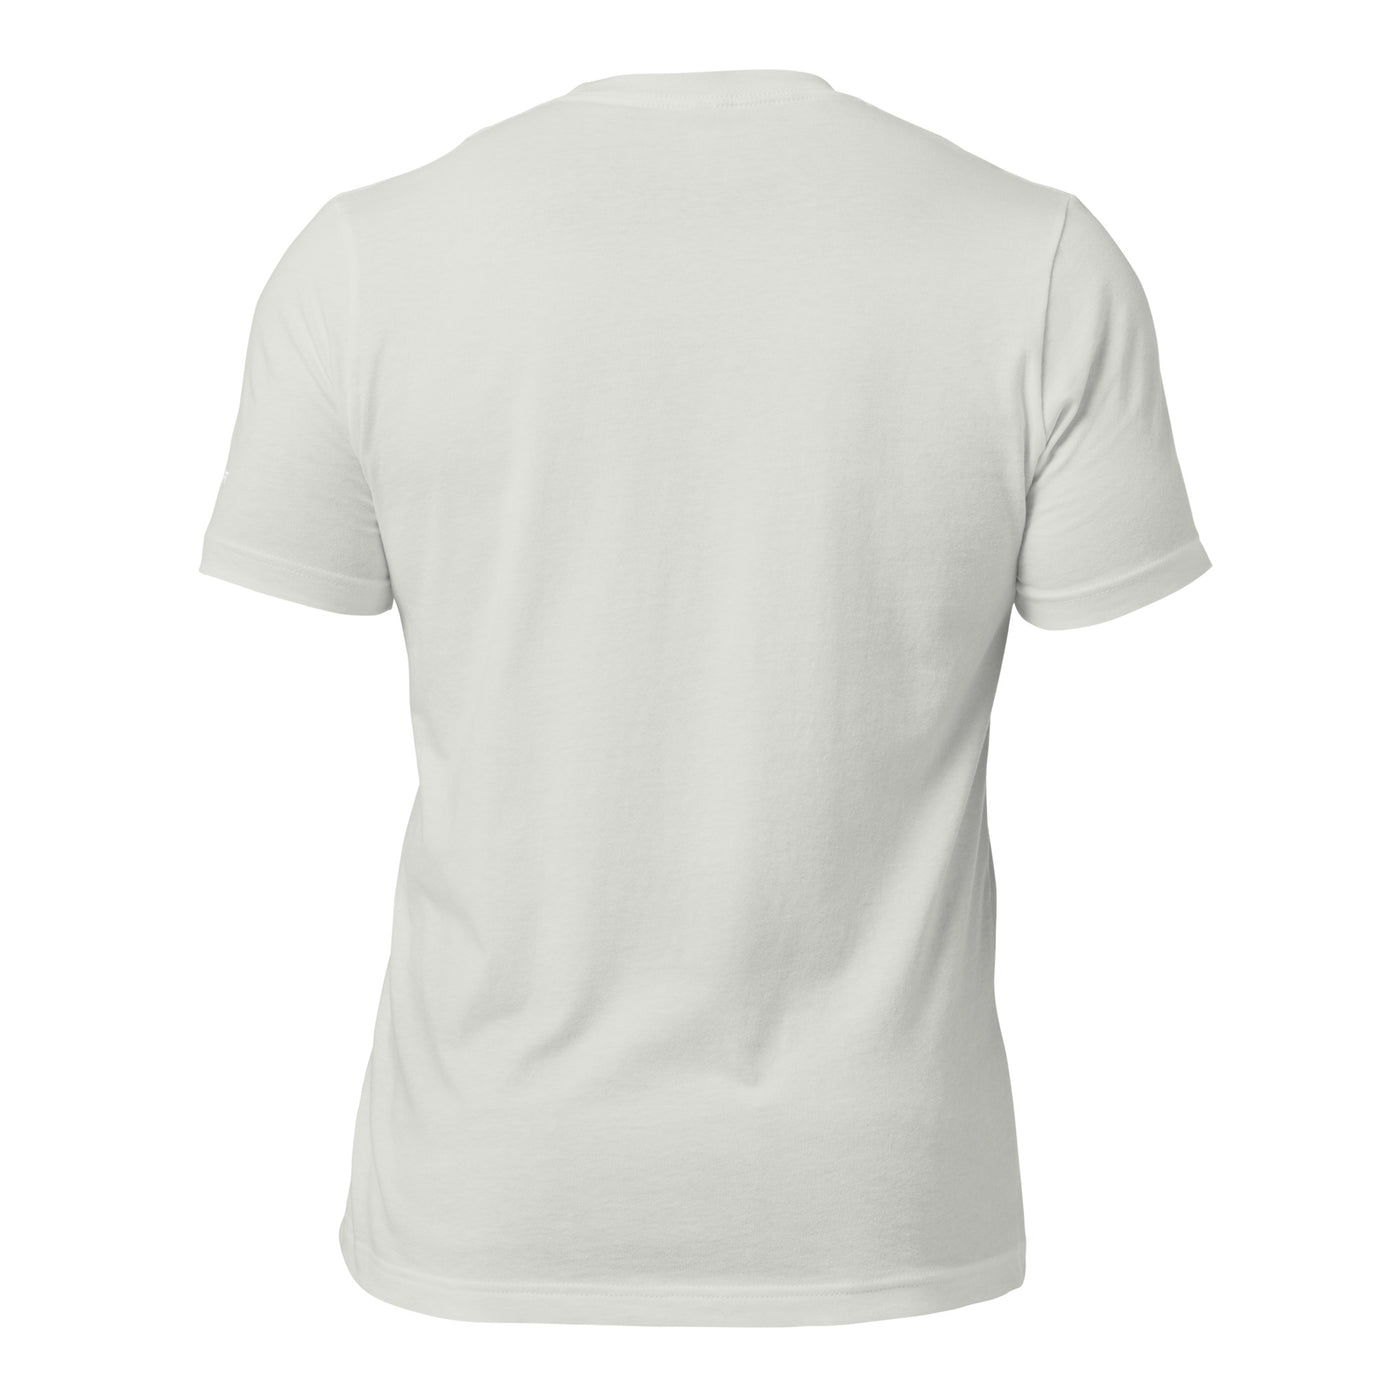 I am not always rude and sarcastic: Sometimes, I am asleep - Unisex t-shirt